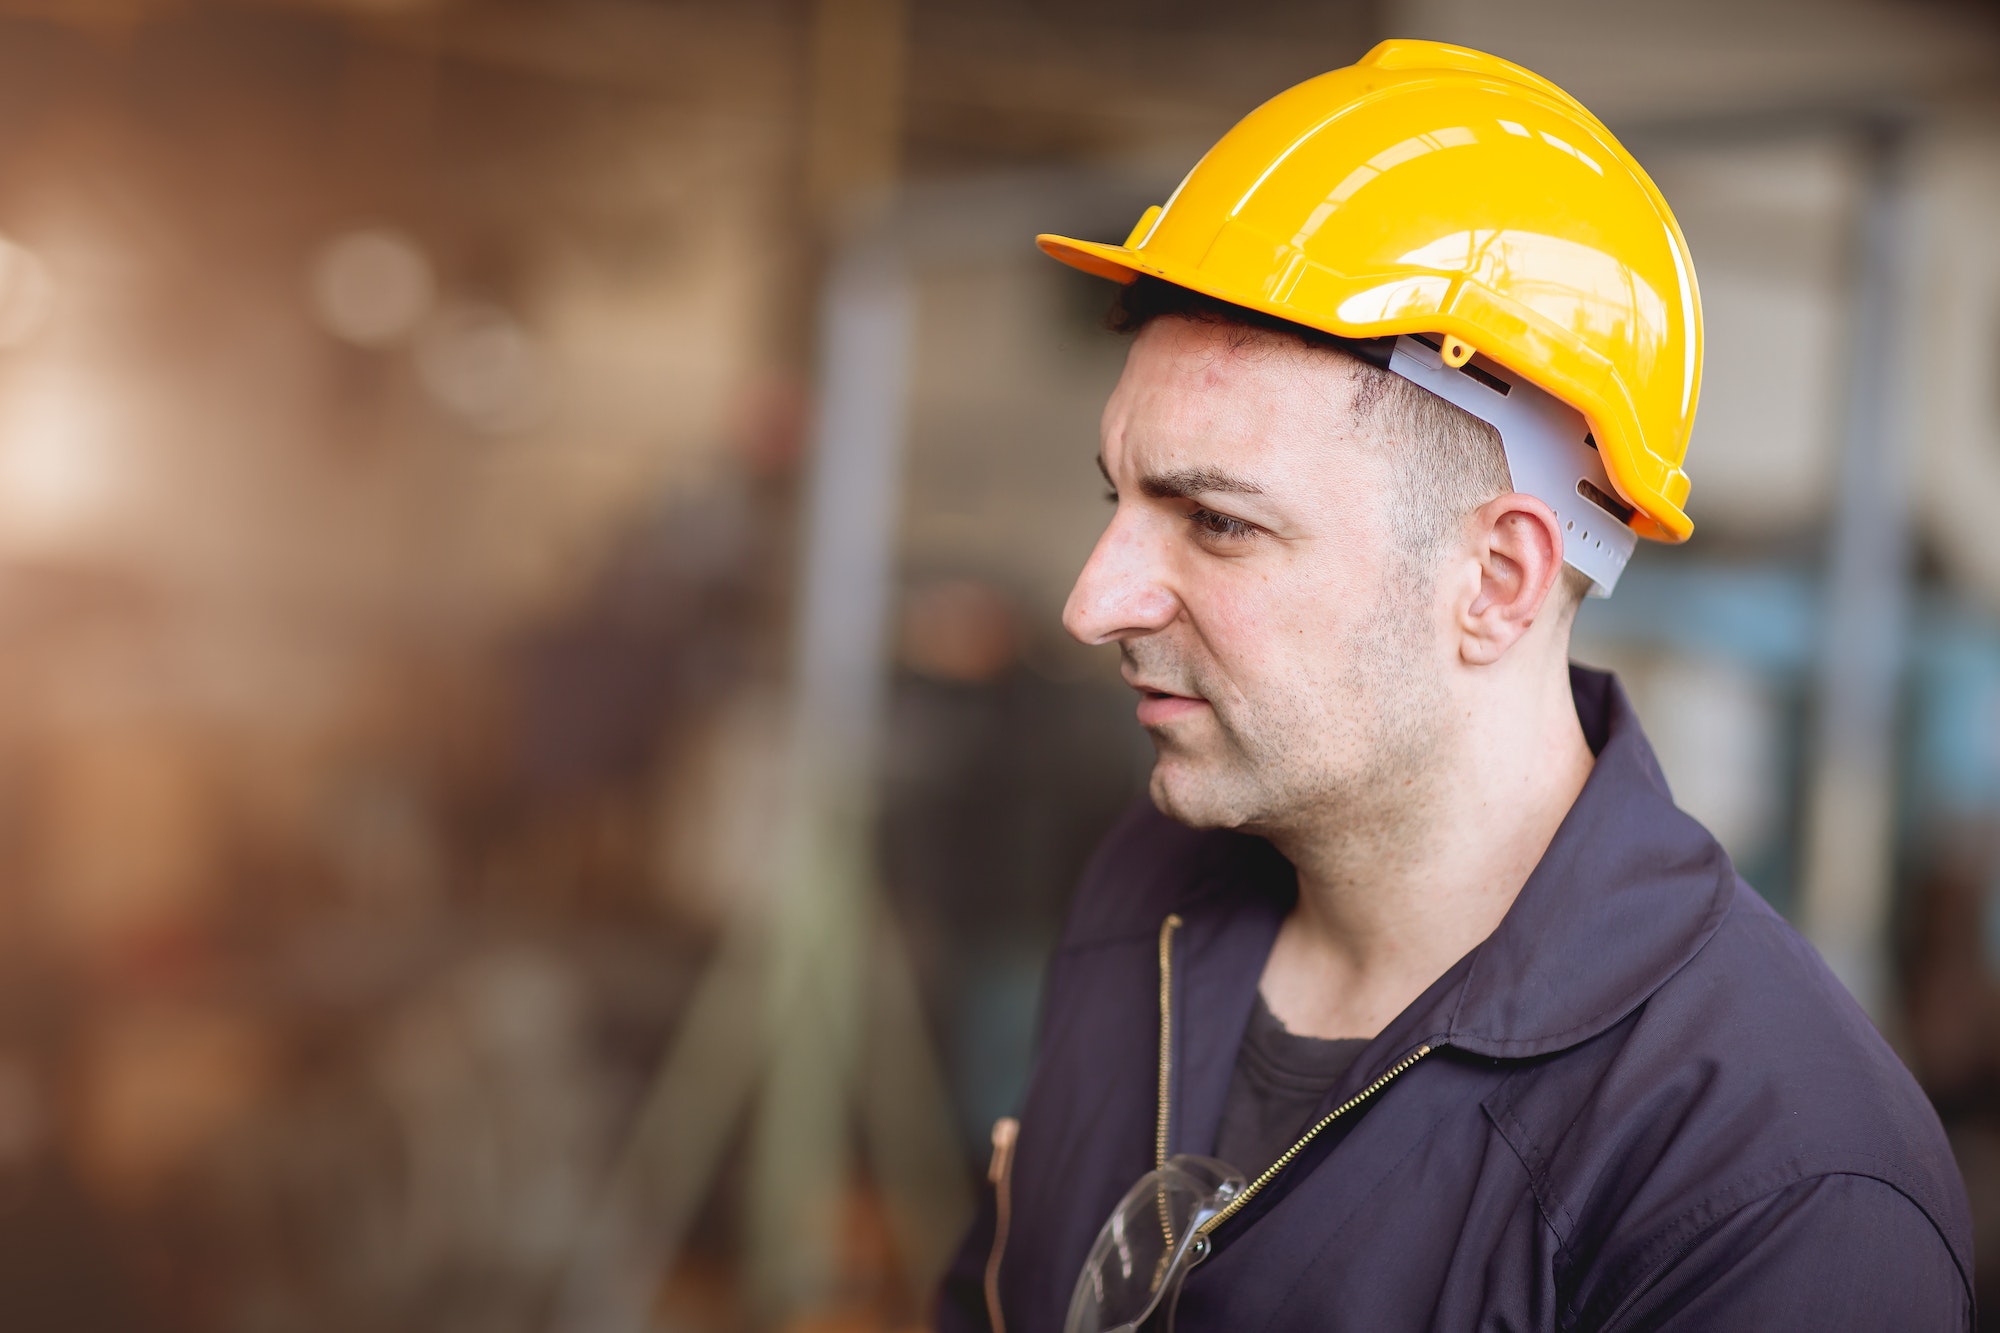 European Russian worker profile image handsome gentleman look wearing helmet safety suit work in fac